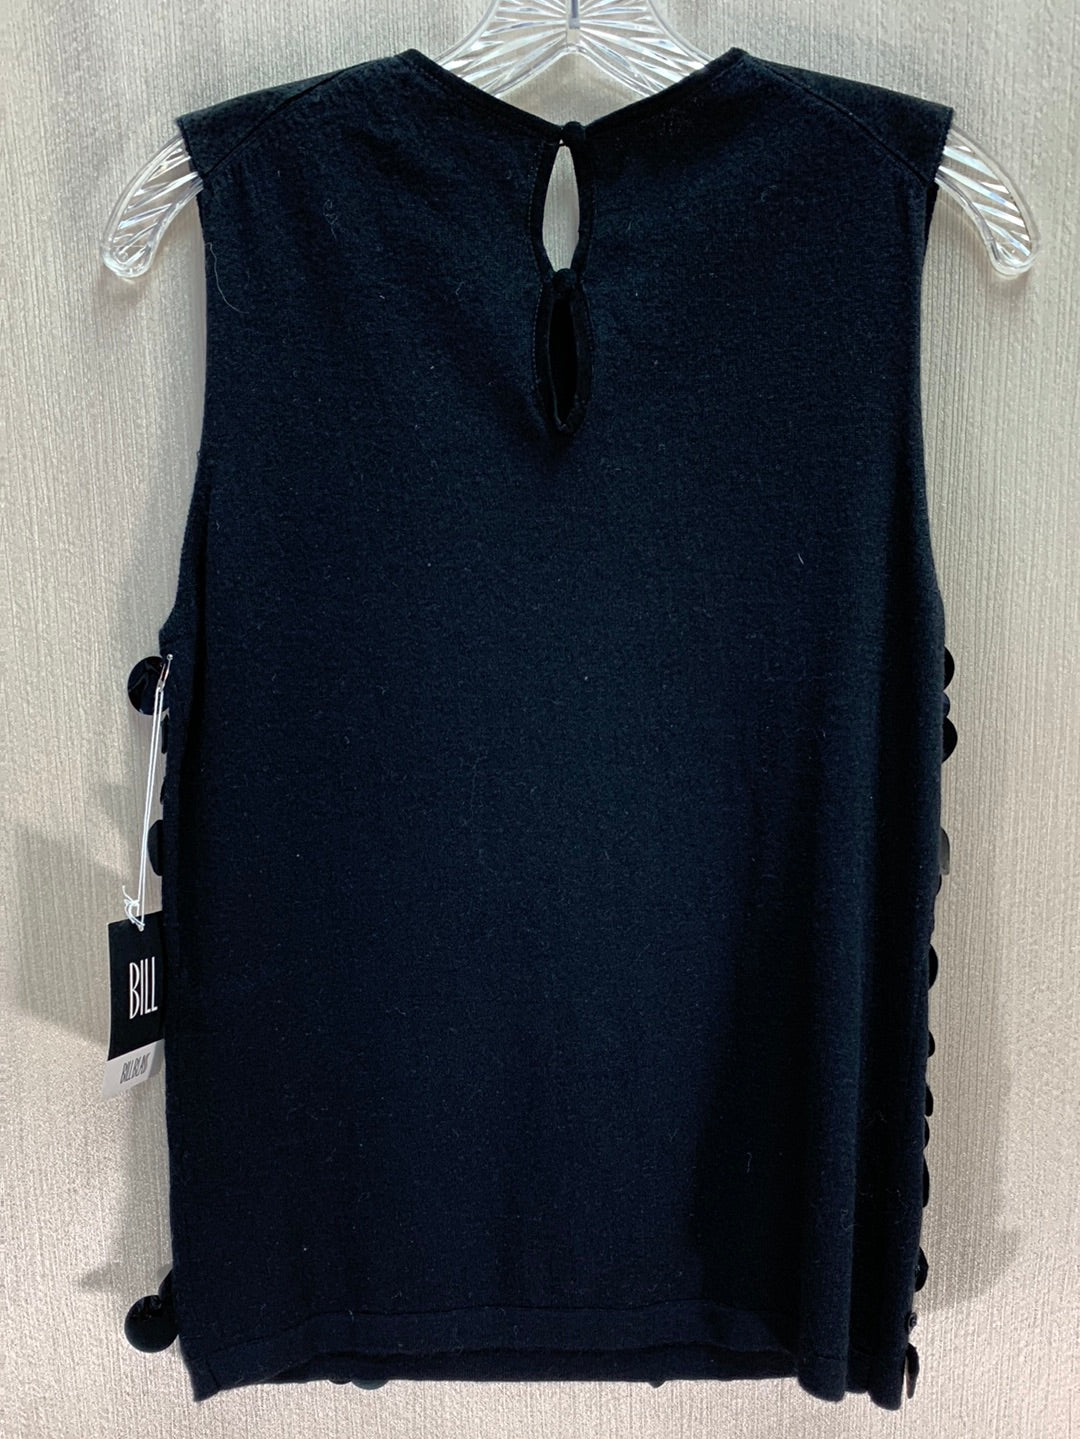 NWT - BILL BLASS black Merino Wool Leather Sequin Sleeveless Top - S